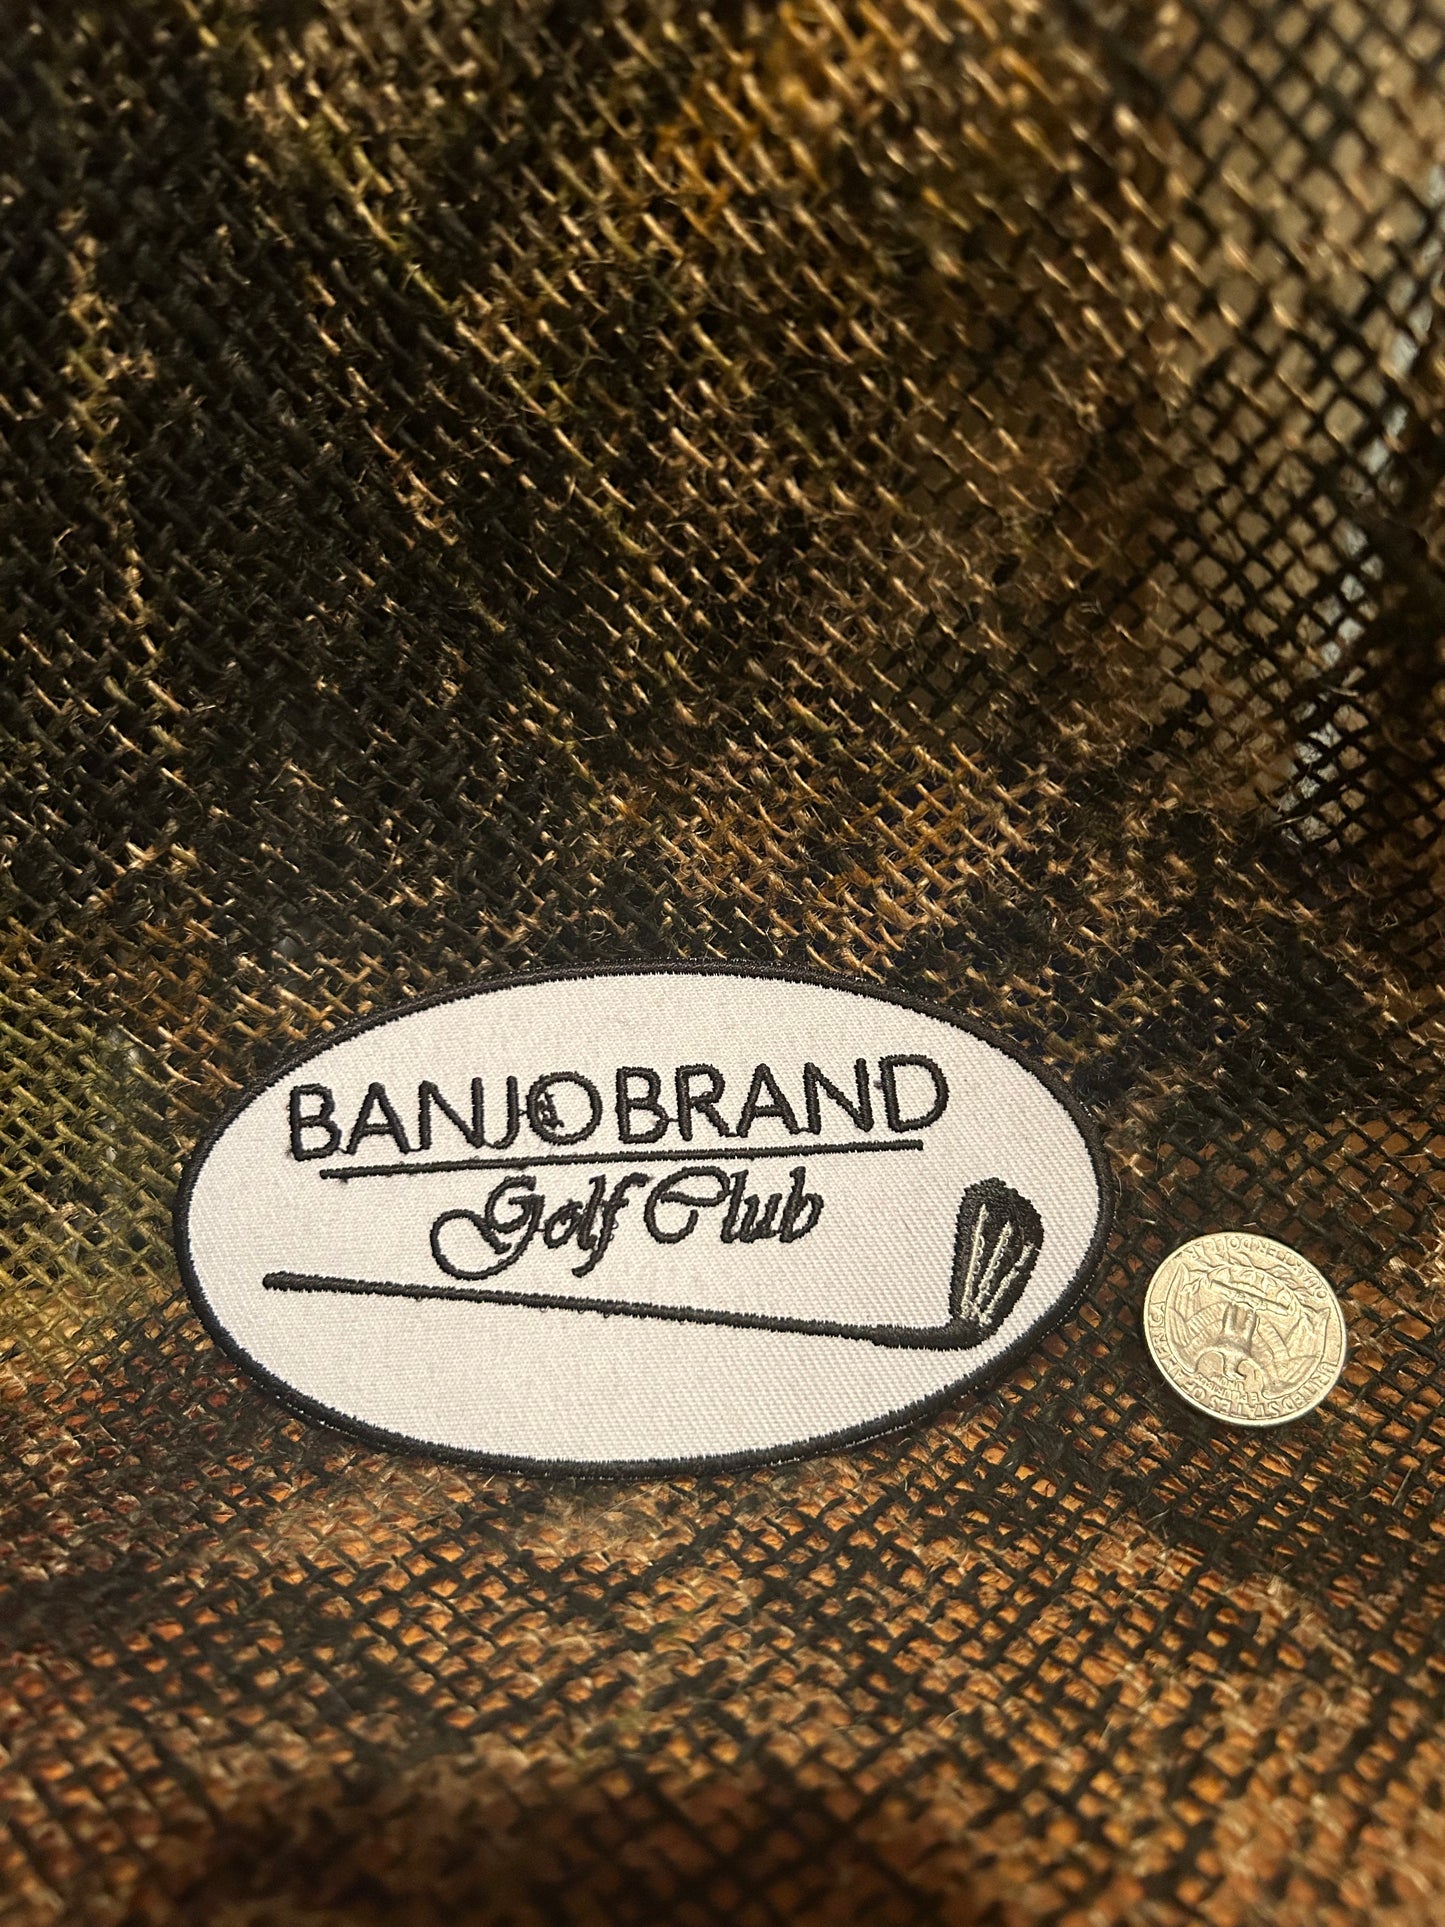 Banjo Brand Golf Club